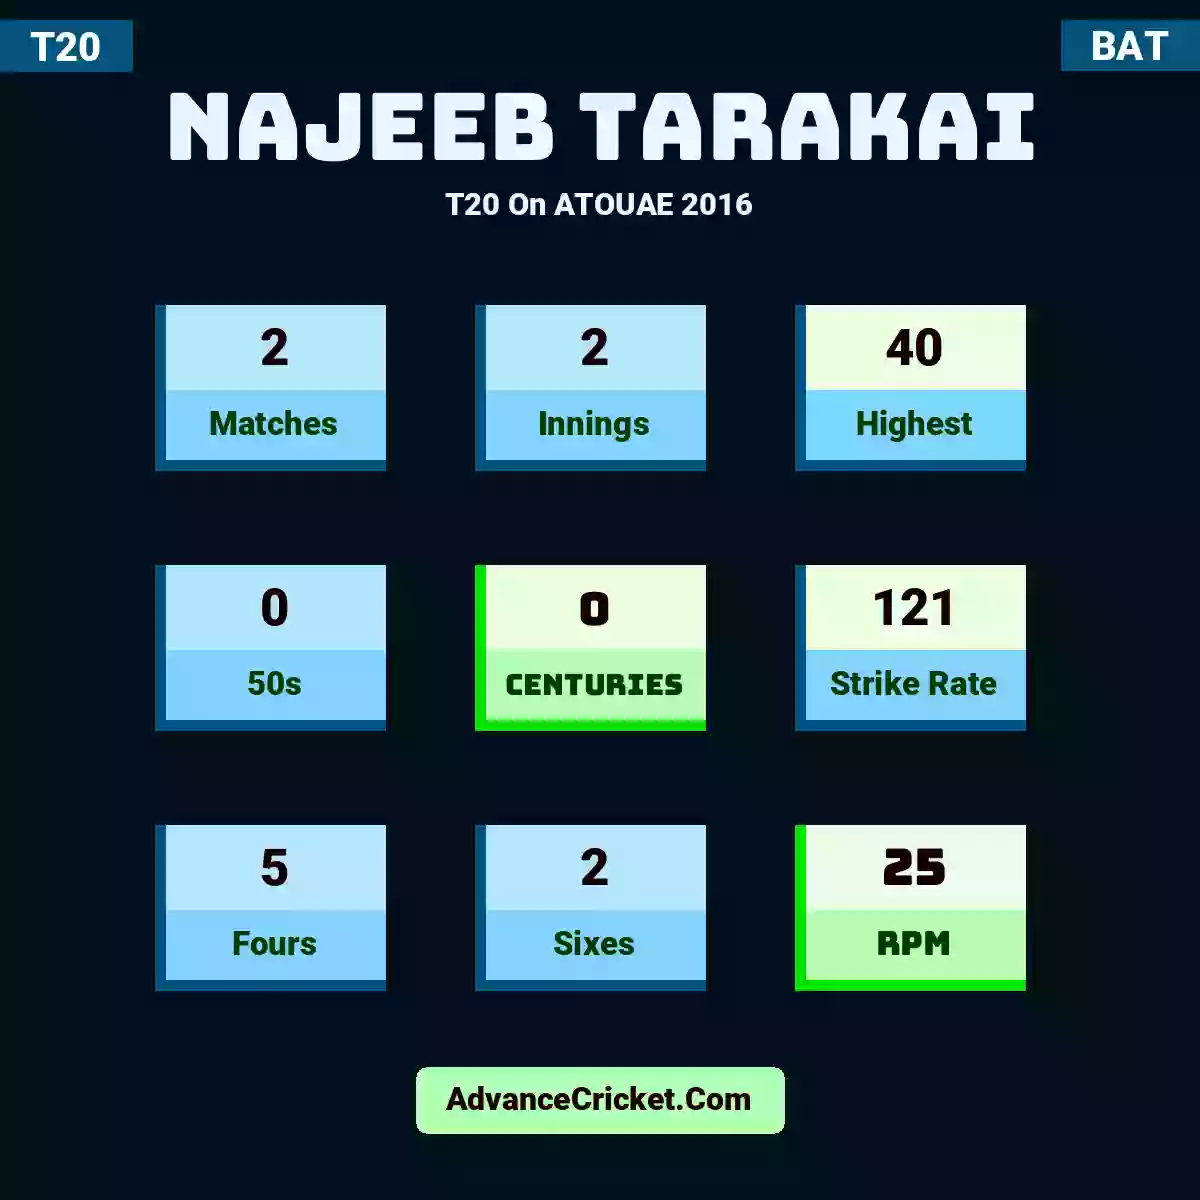 Najeeb Tarakai T20  On ATOUAE 2016, Najeeb Tarakai played 2 matches, scored 40 runs as highest, 0 half-centuries, and 0 centuries, with a strike rate of 121. N.Tarakai hit 5 fours and 2 sixes, with an RPM of 25.